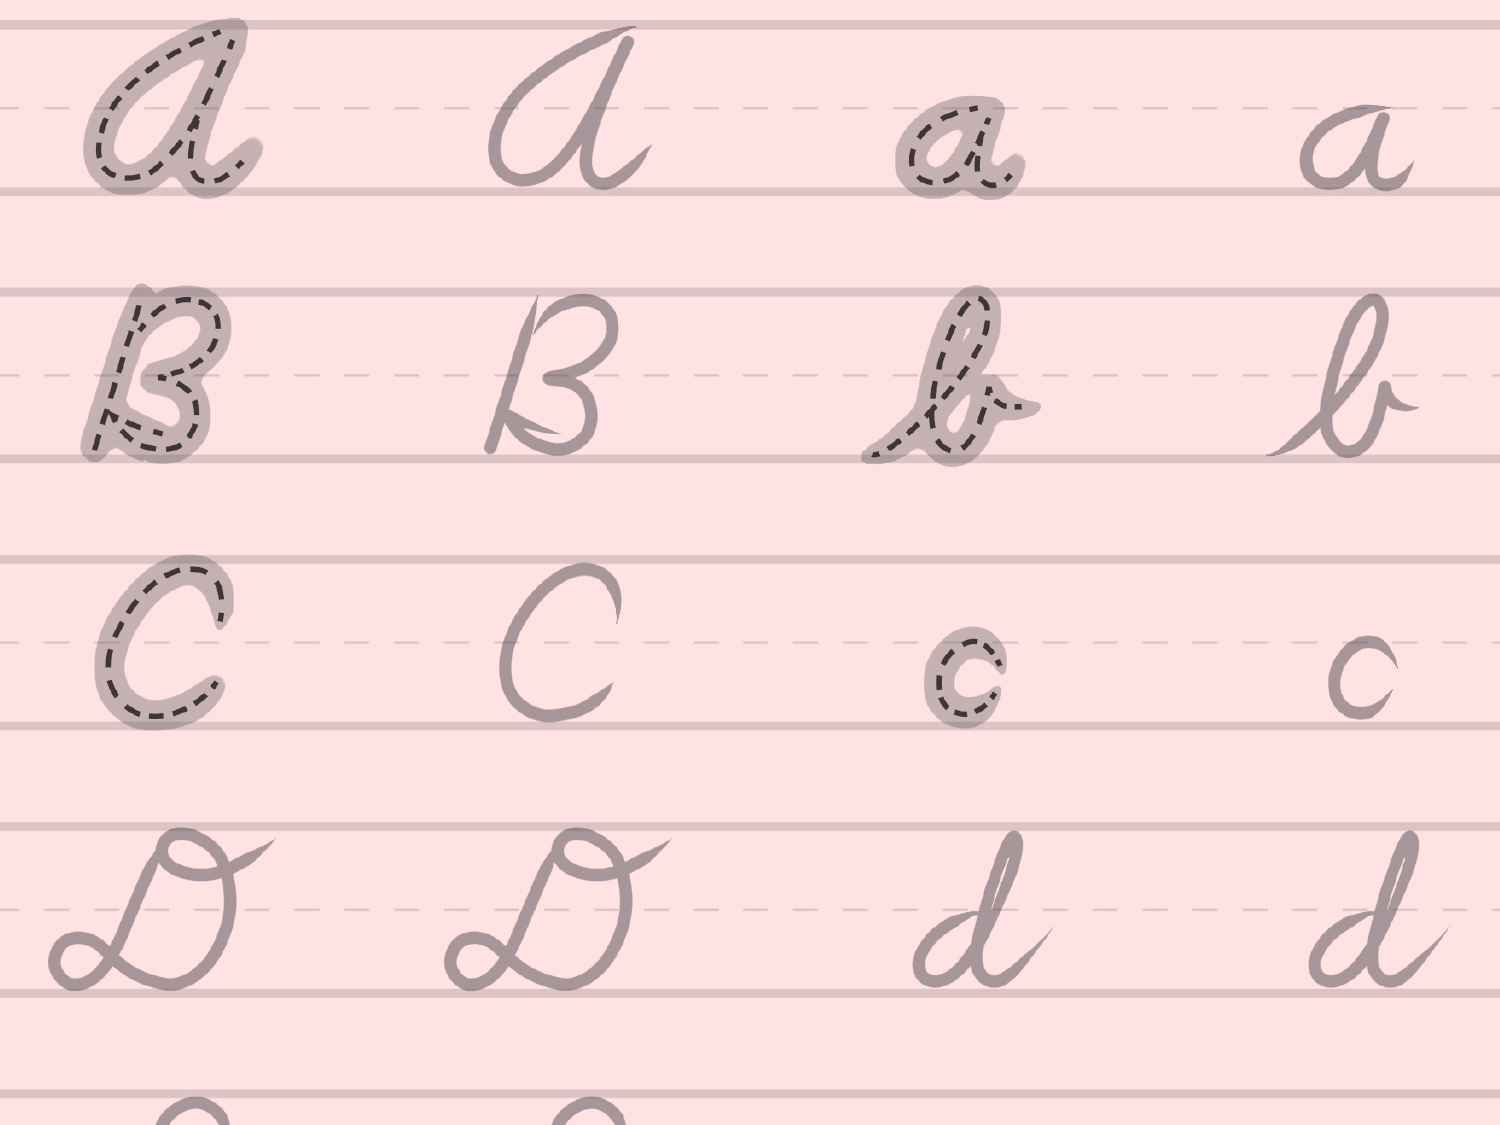 Free print out of cursive alphabet